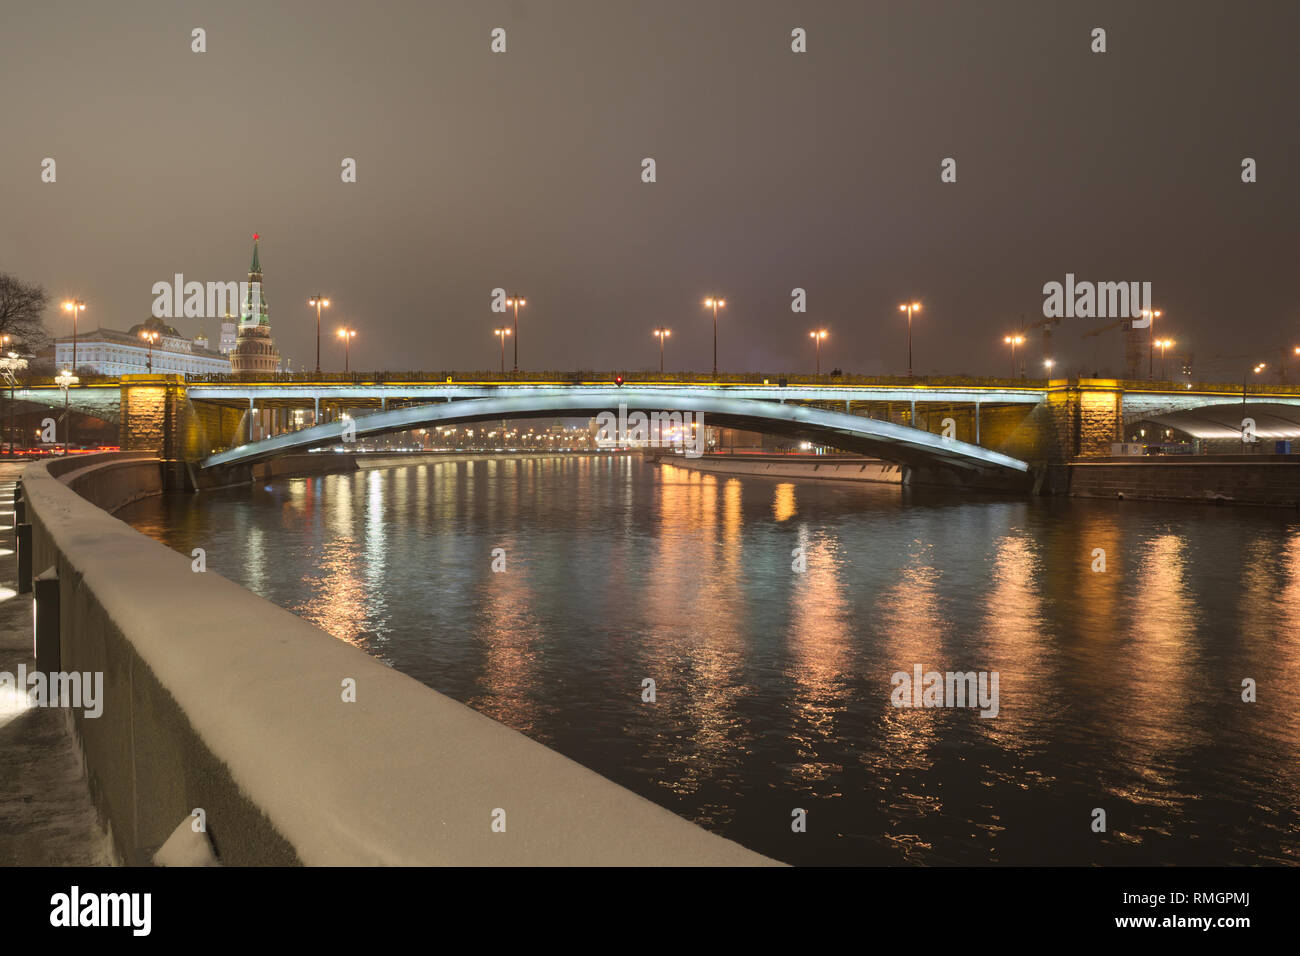 Bolshoy Kamenny Bridge (Greater Stone Bridge) at night Stock Photo